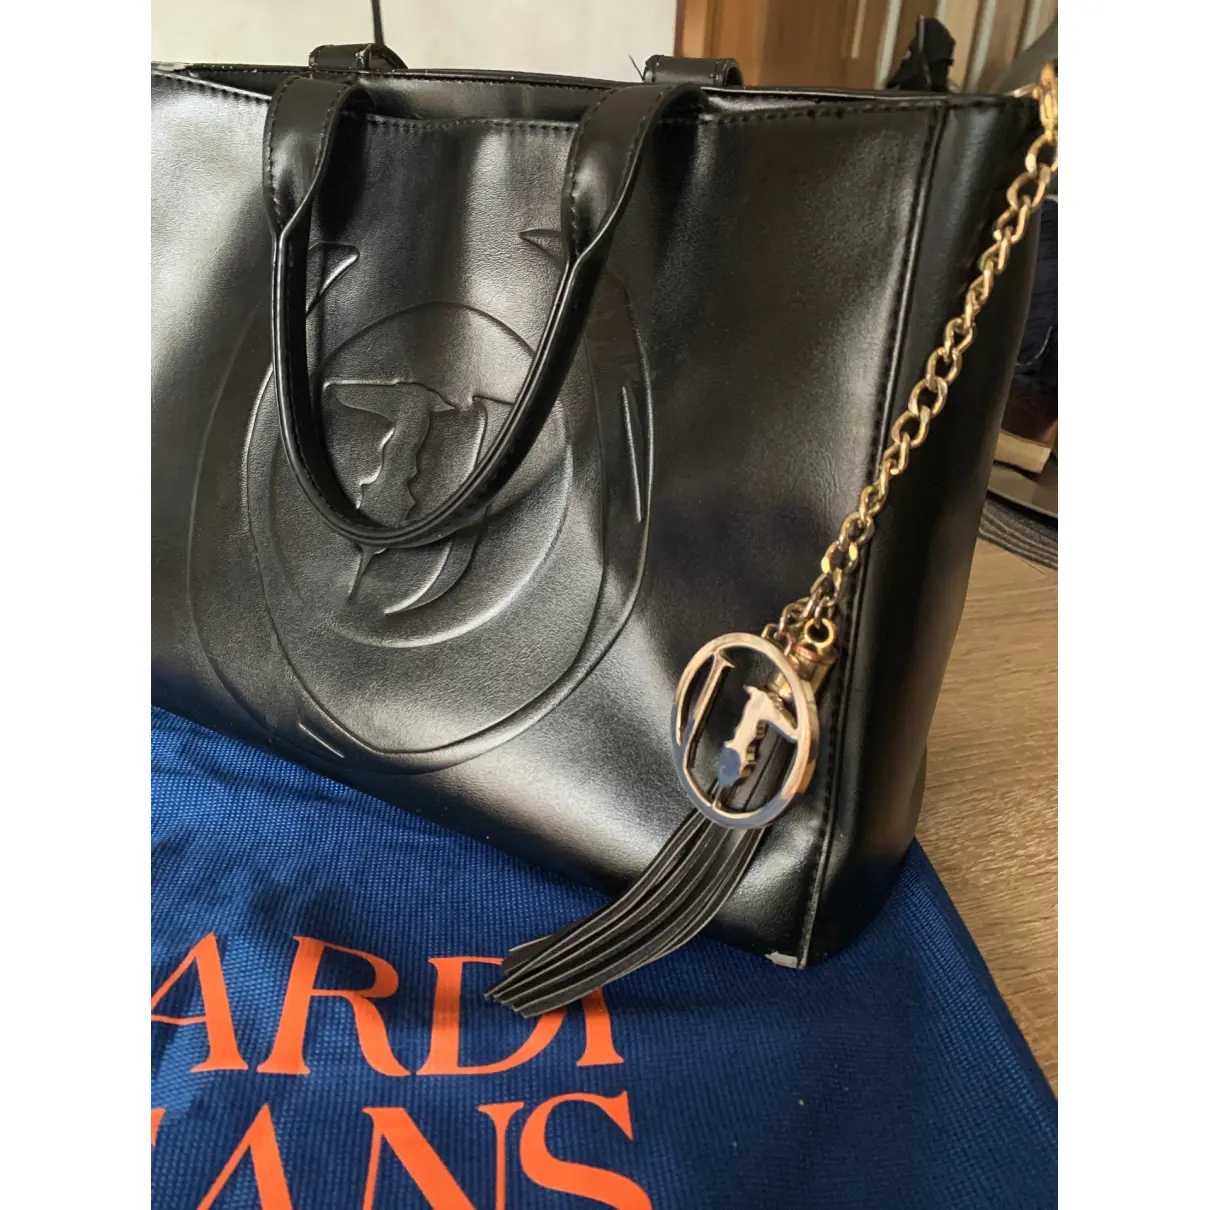 Buy Trussardi Jeans Leather handbag online